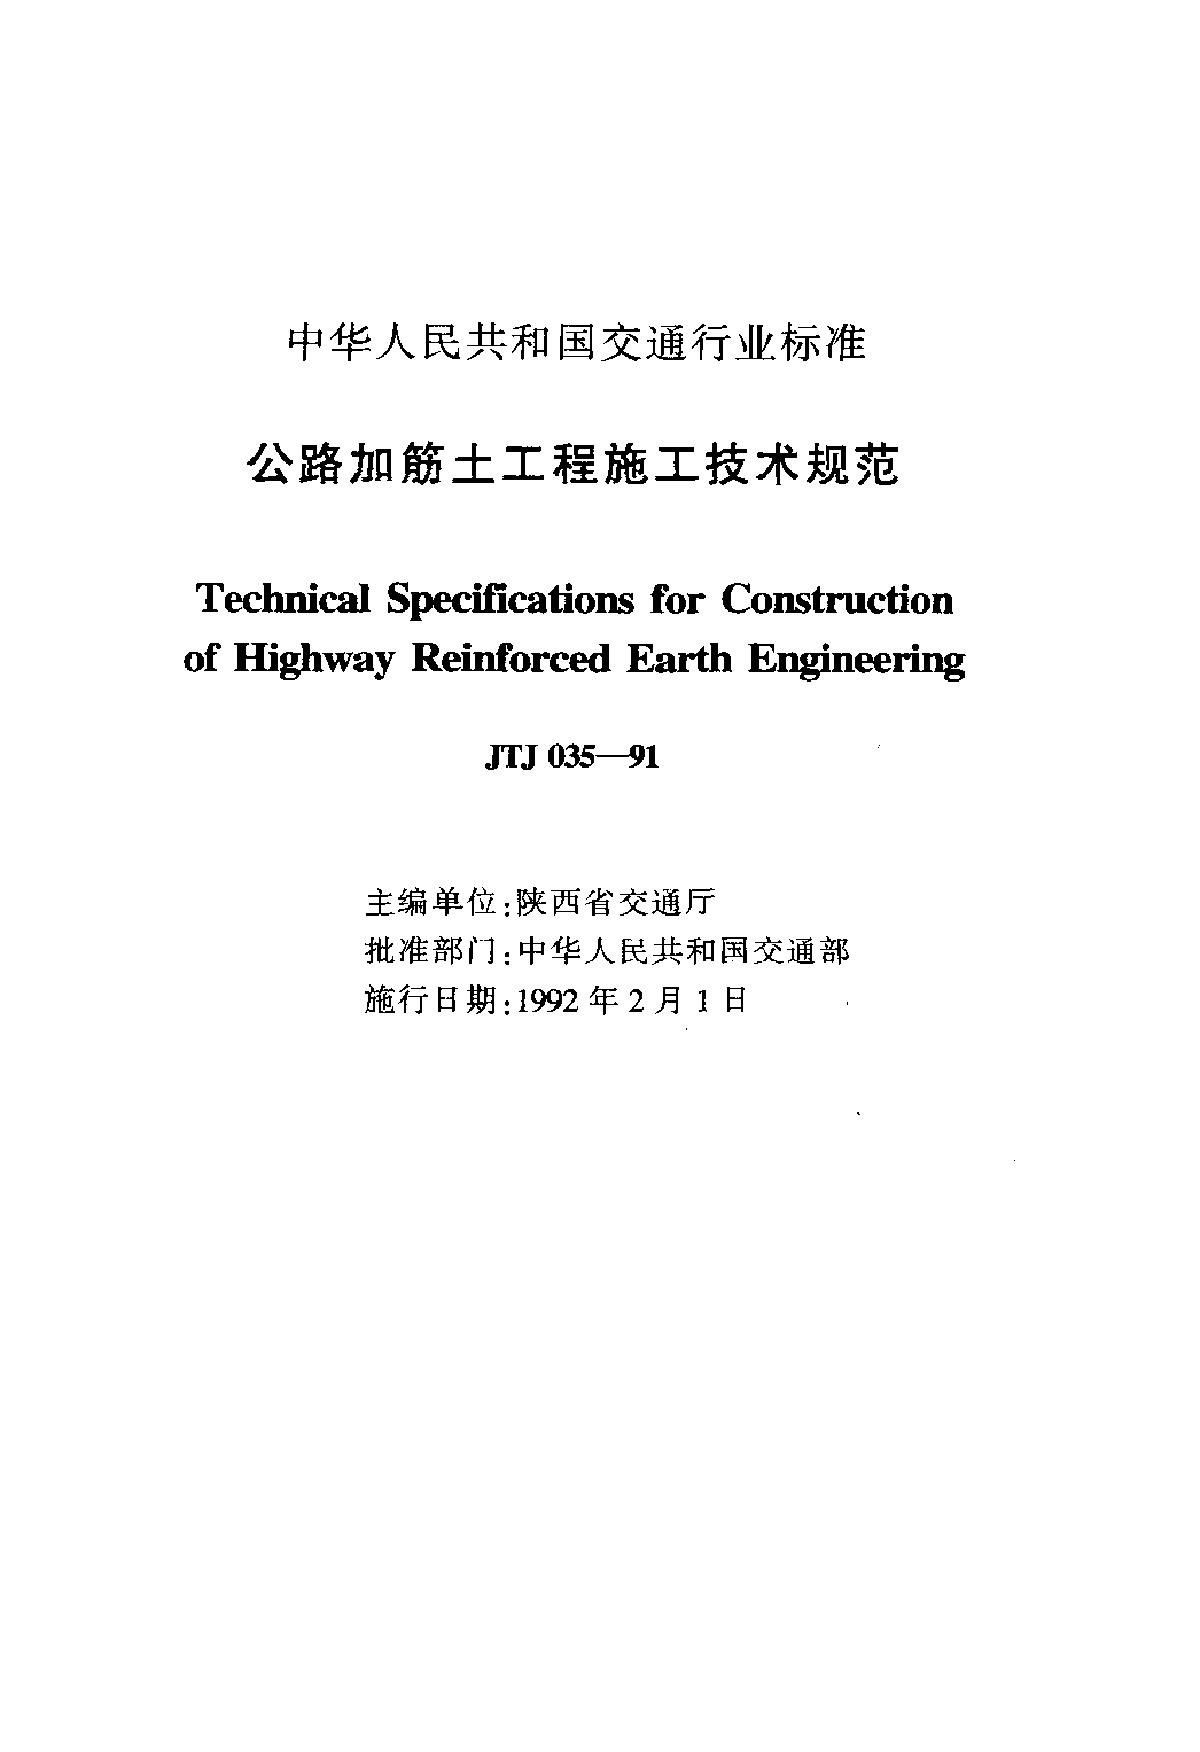 JTJ035-91公路加筋土工程施工技术规范-图二